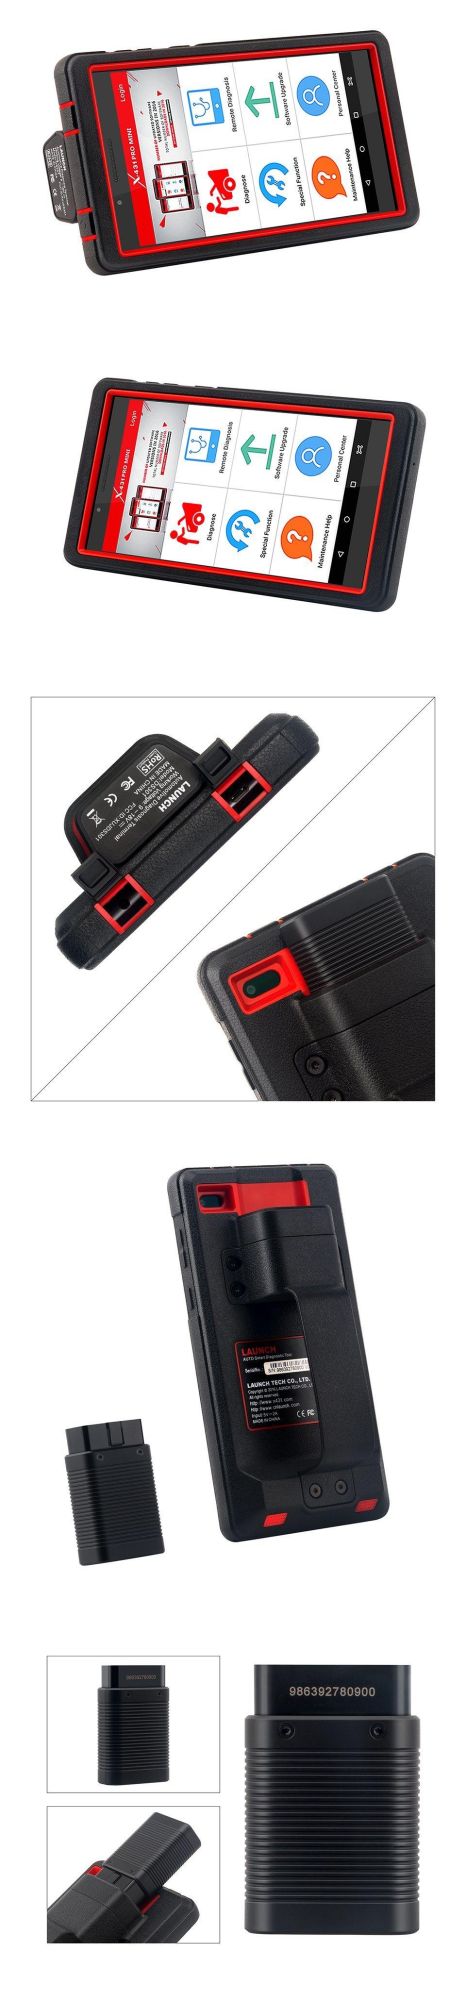 Launch X-431 PRO Mini Full System WiFi/Bt Auto Diagnostic Car Scanner